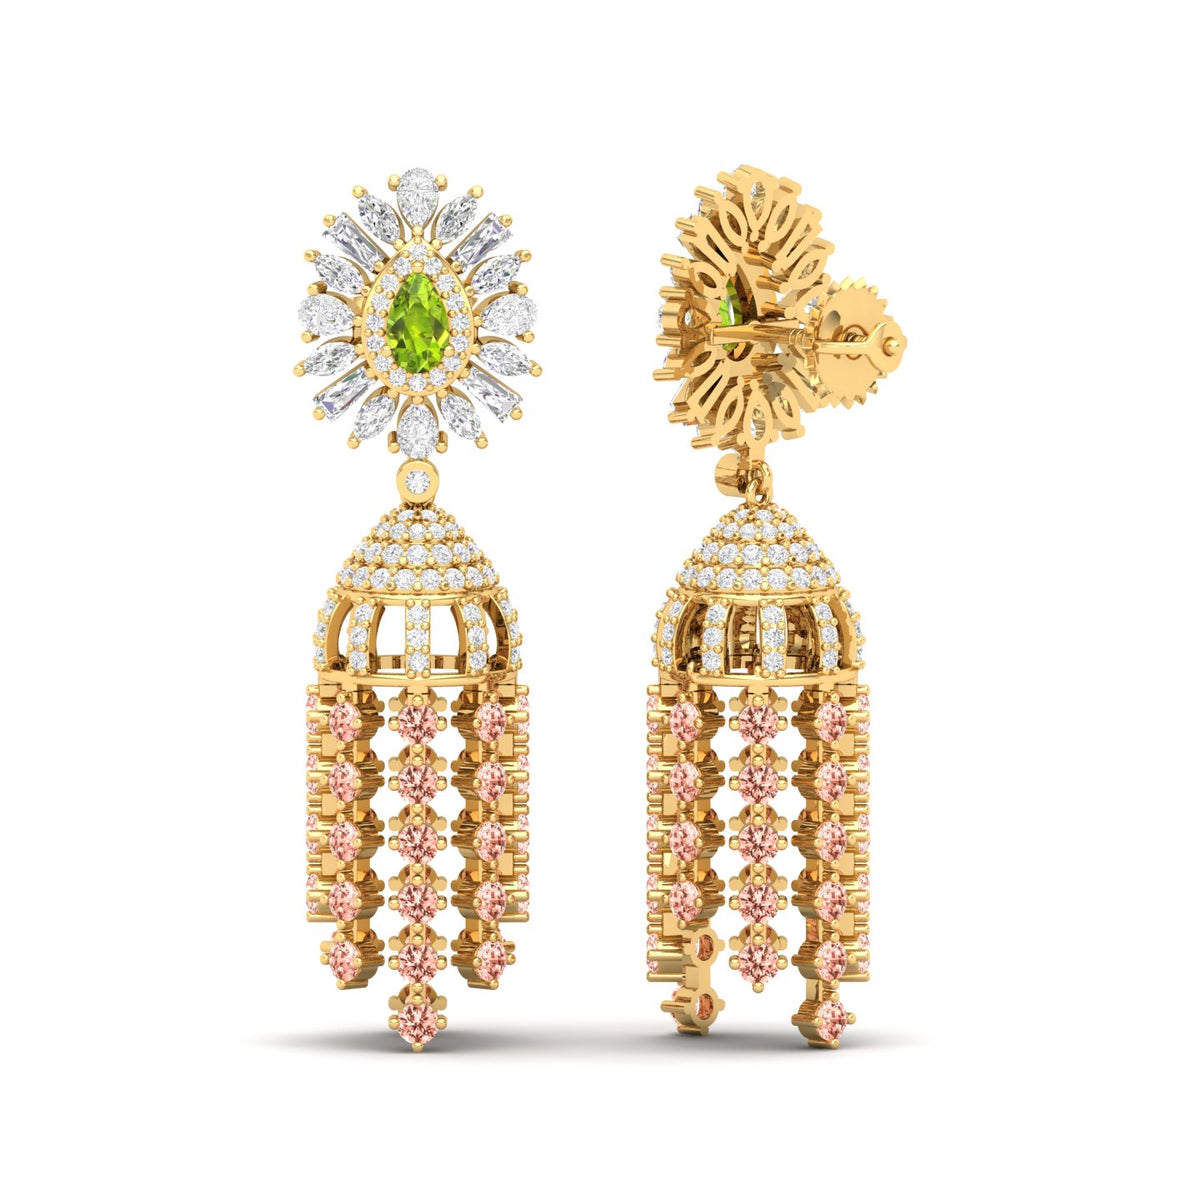 Maurya Dossal Chandelier Earrings with Peridot and Diamonds